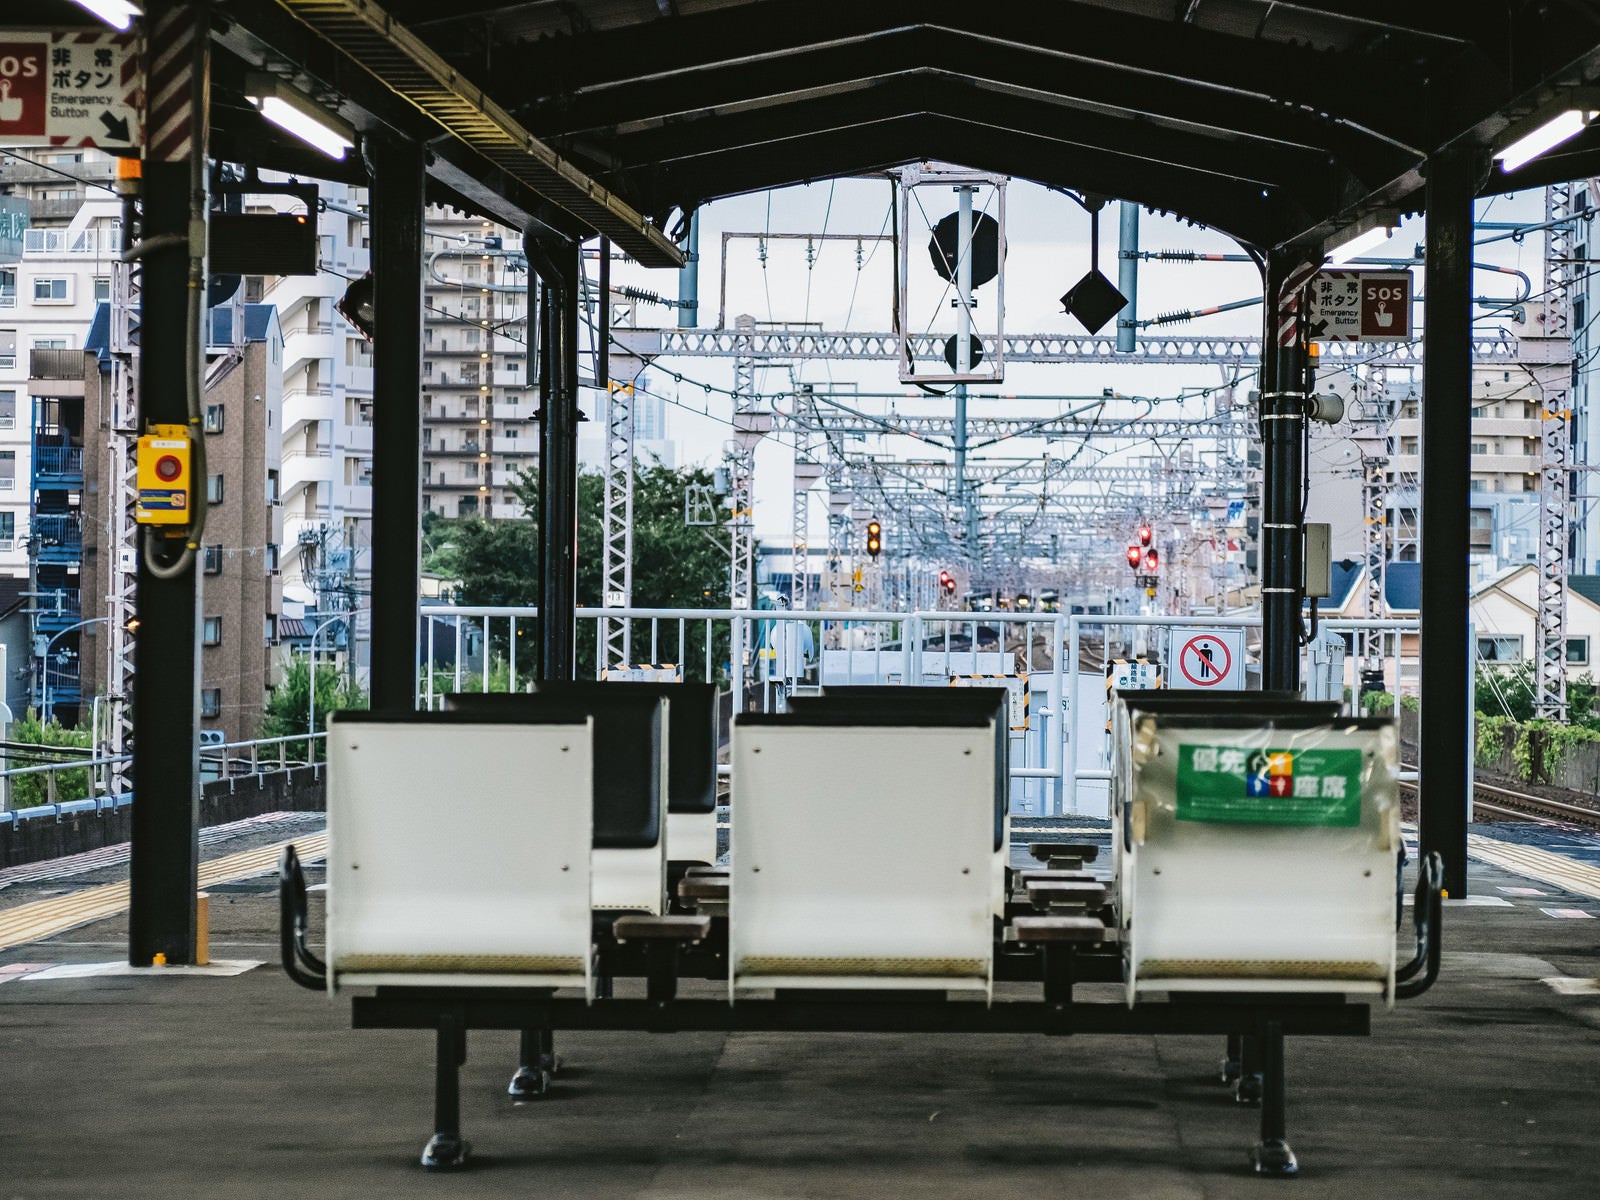 「JR環状線野田駅のホームから見える景色」の写真